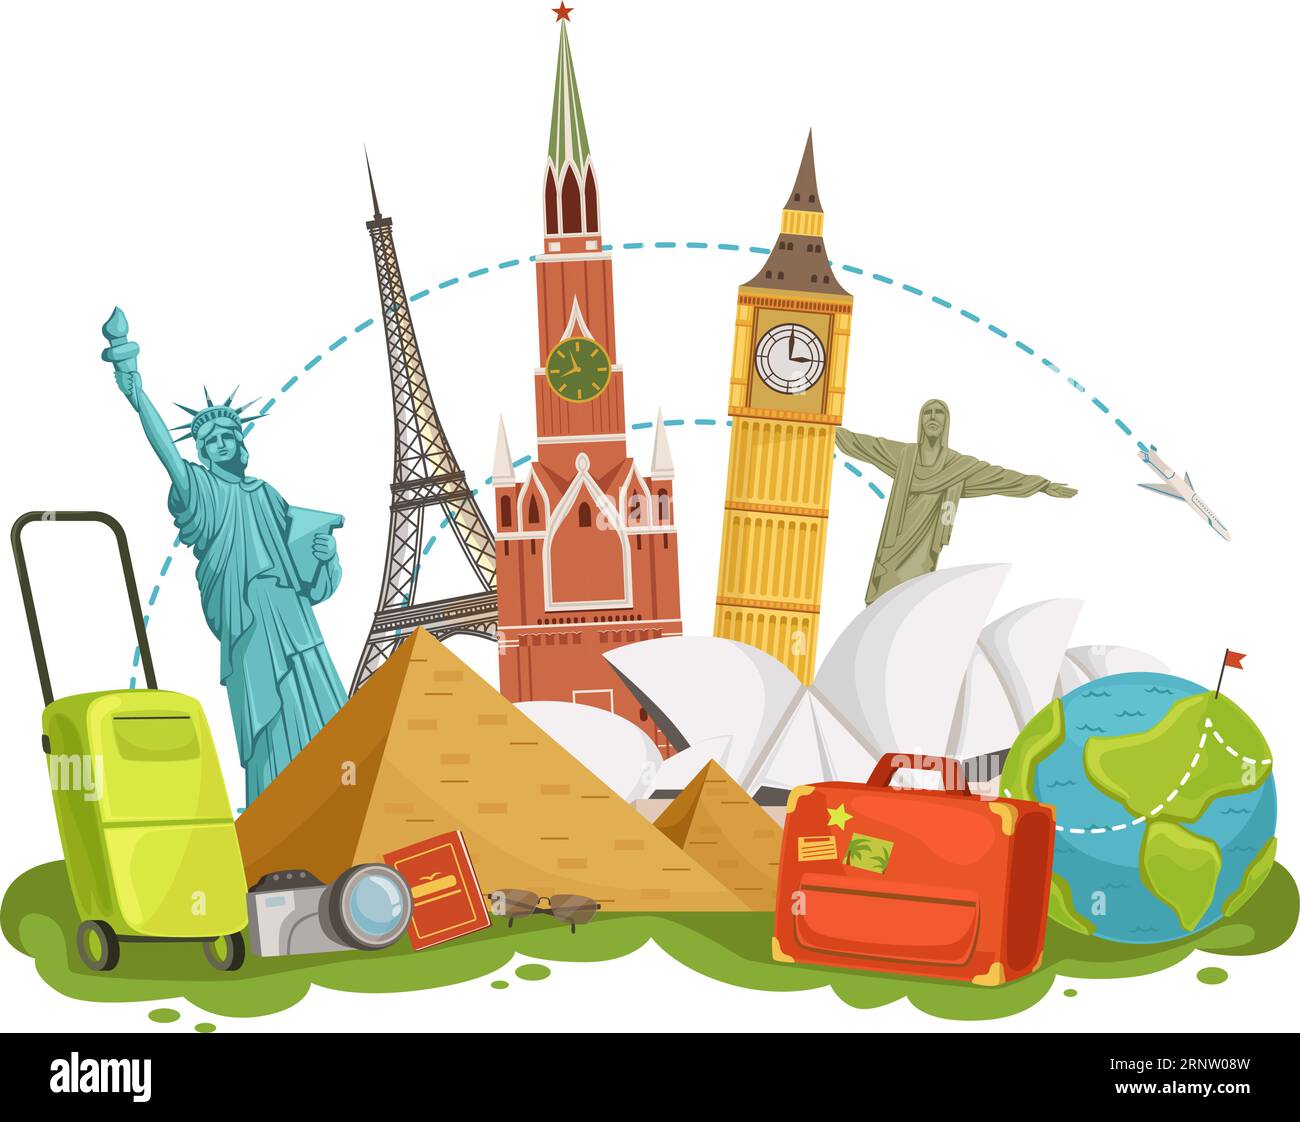 Torist world travel cartoon concept with famous landmarks Stock Vector